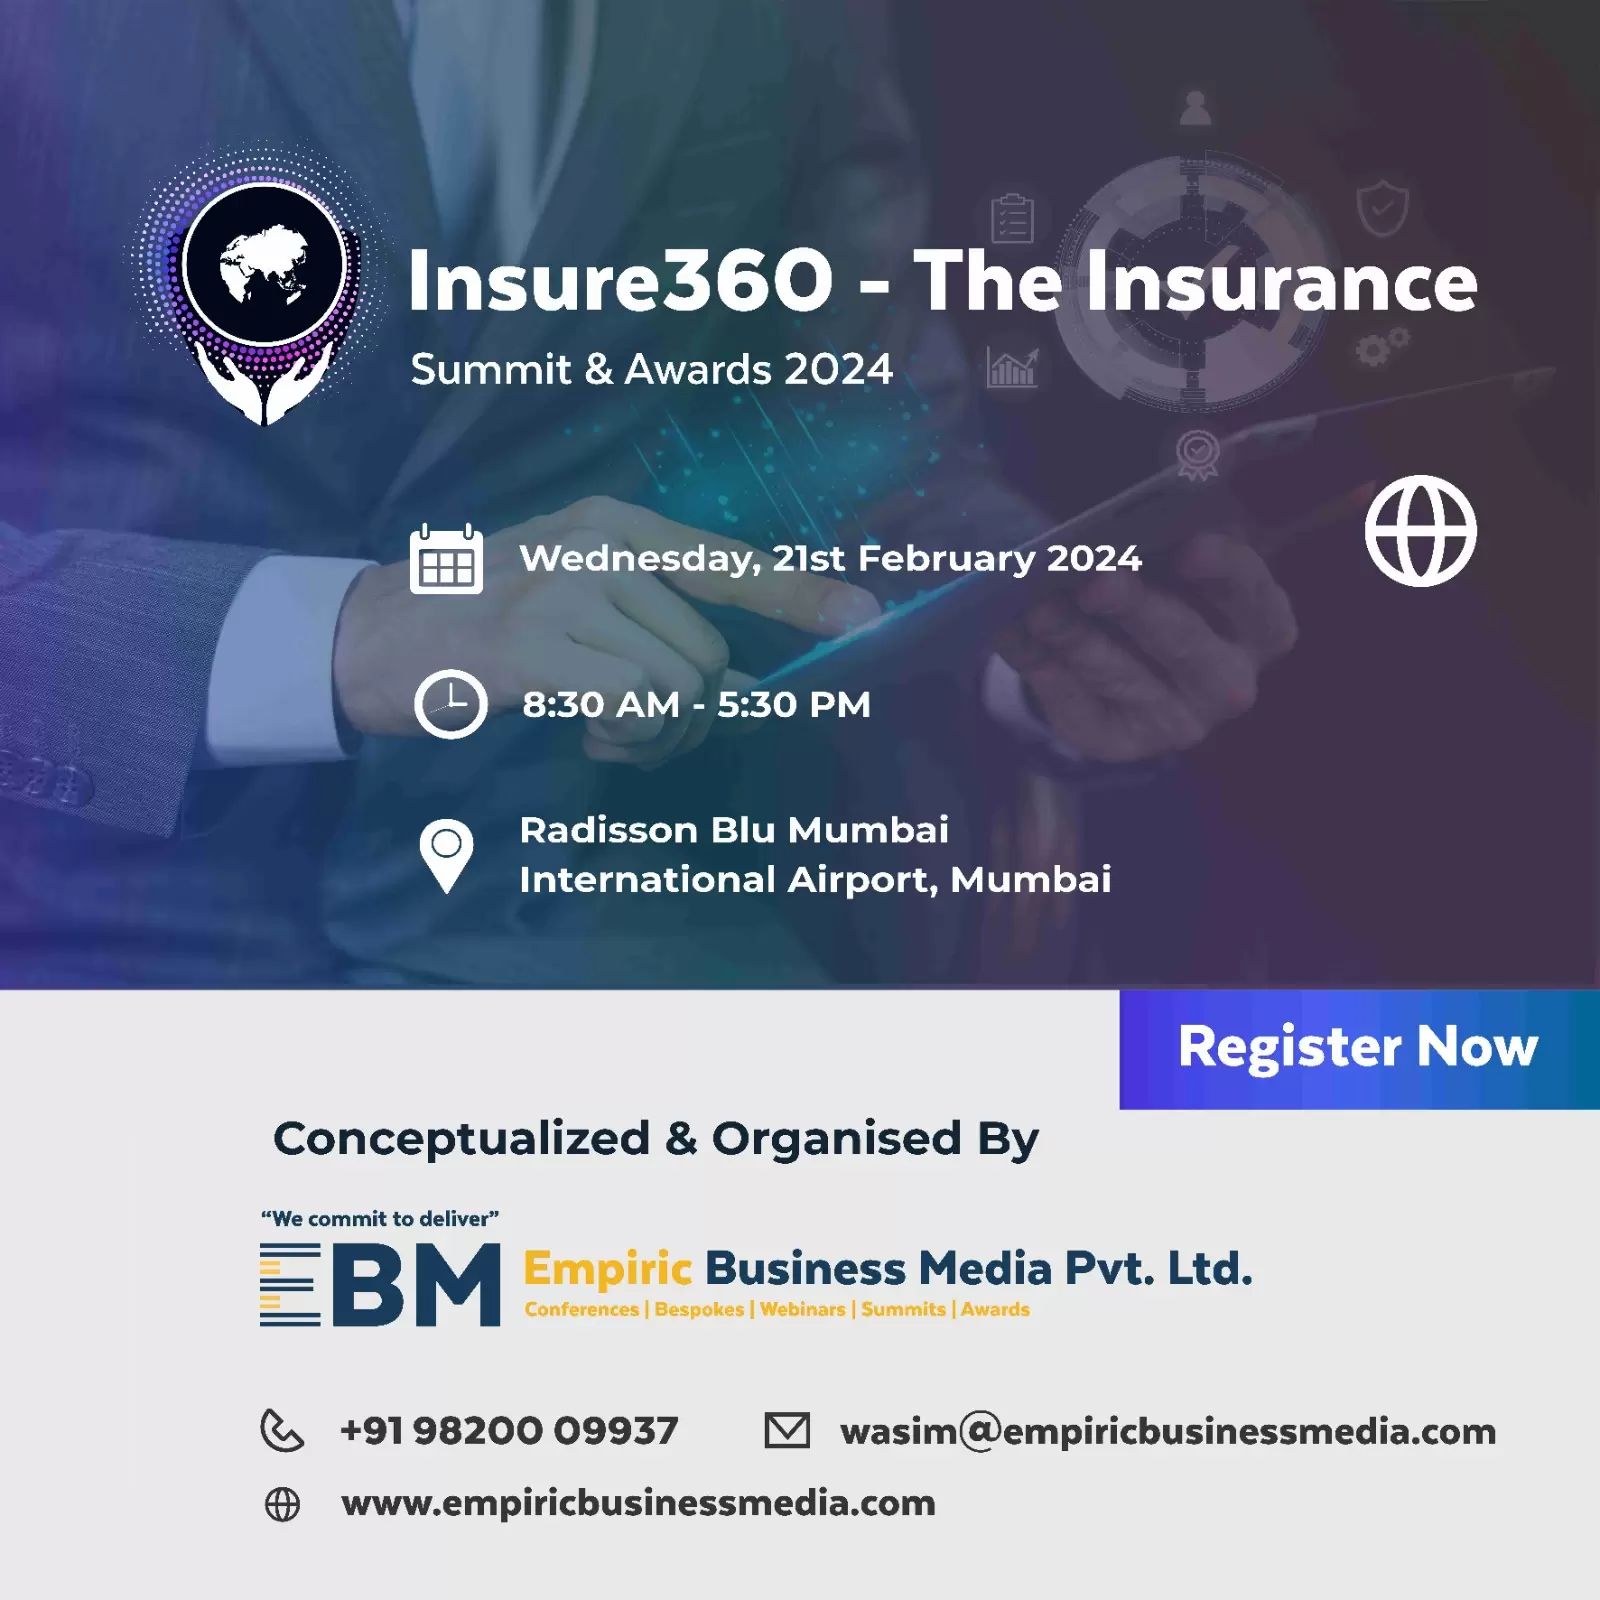 Insure360 - The Insurance Summit & Awards 2024